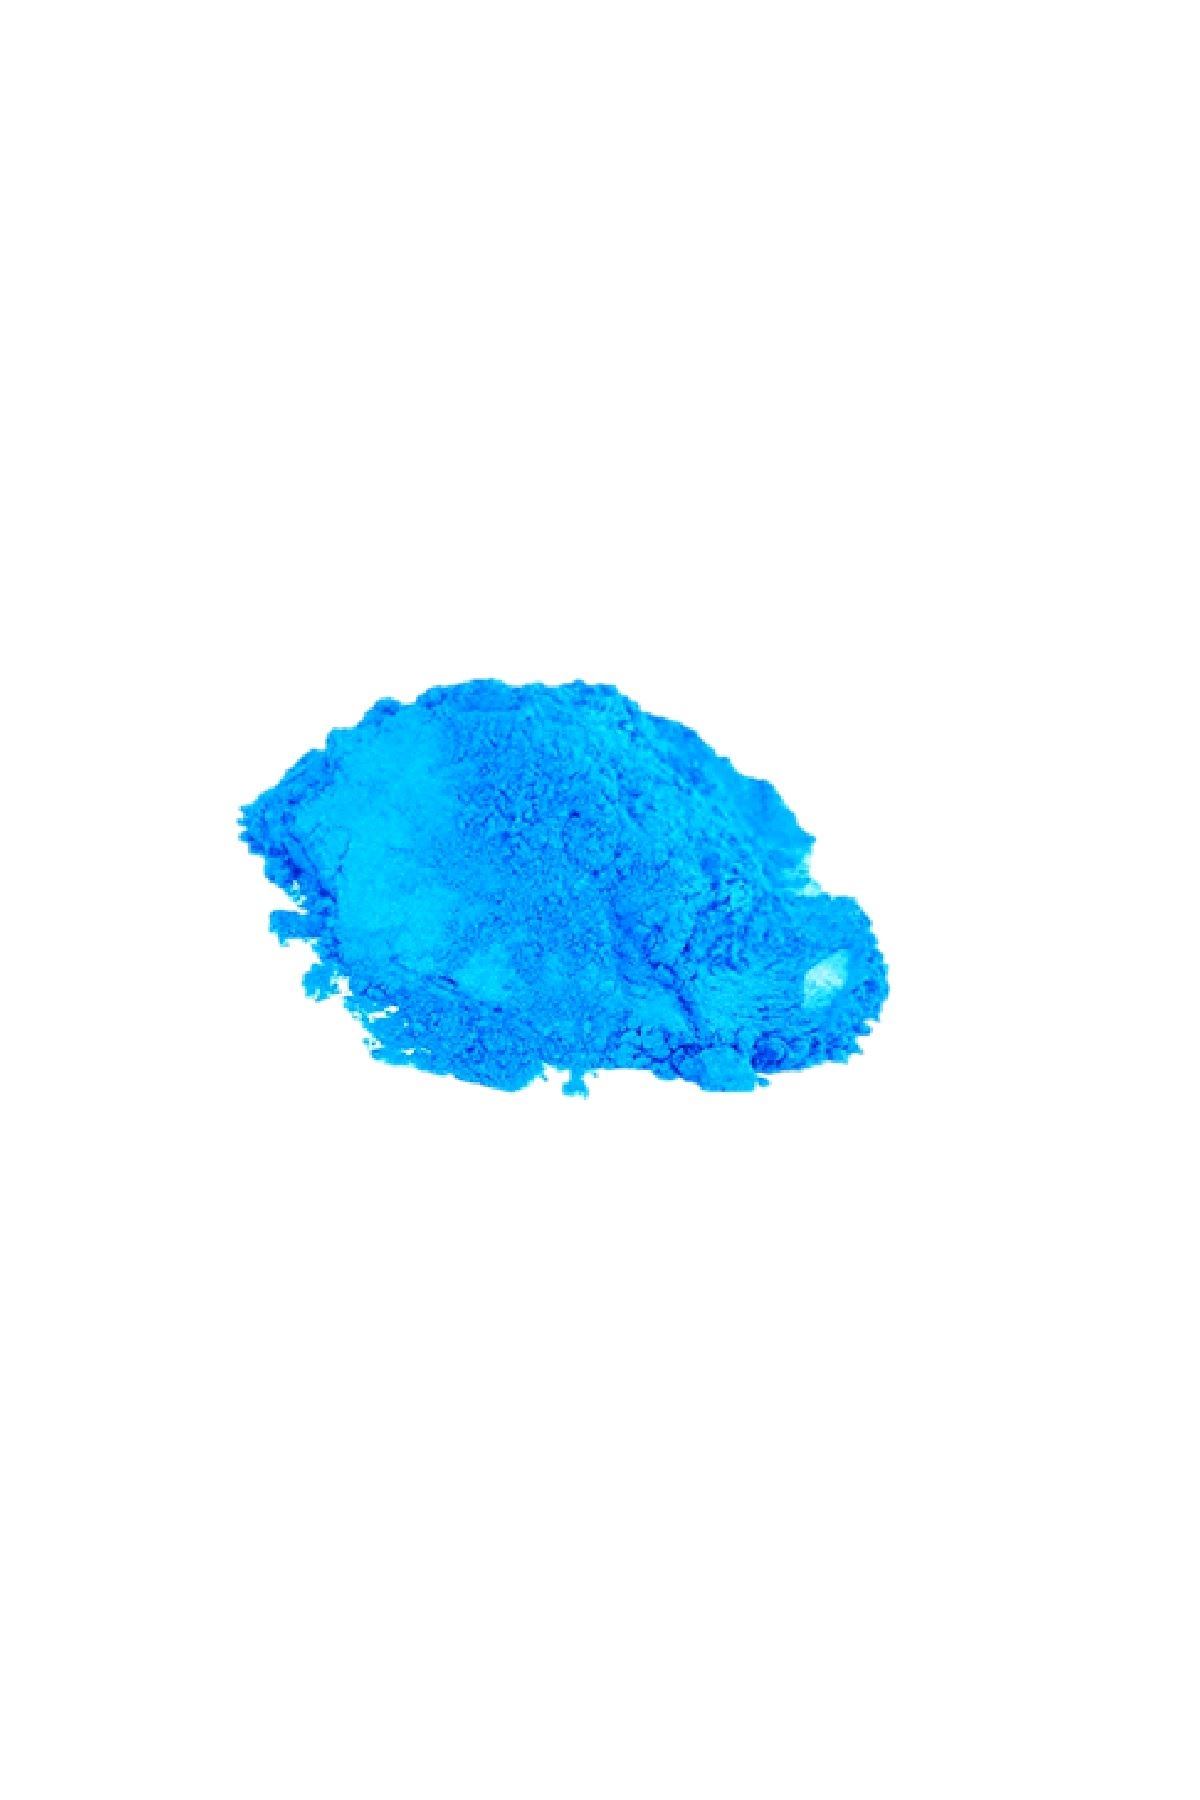 Brtr 10 Gr Bright Blue Epoksi Metalik Toz Pigment(parlak mavi)